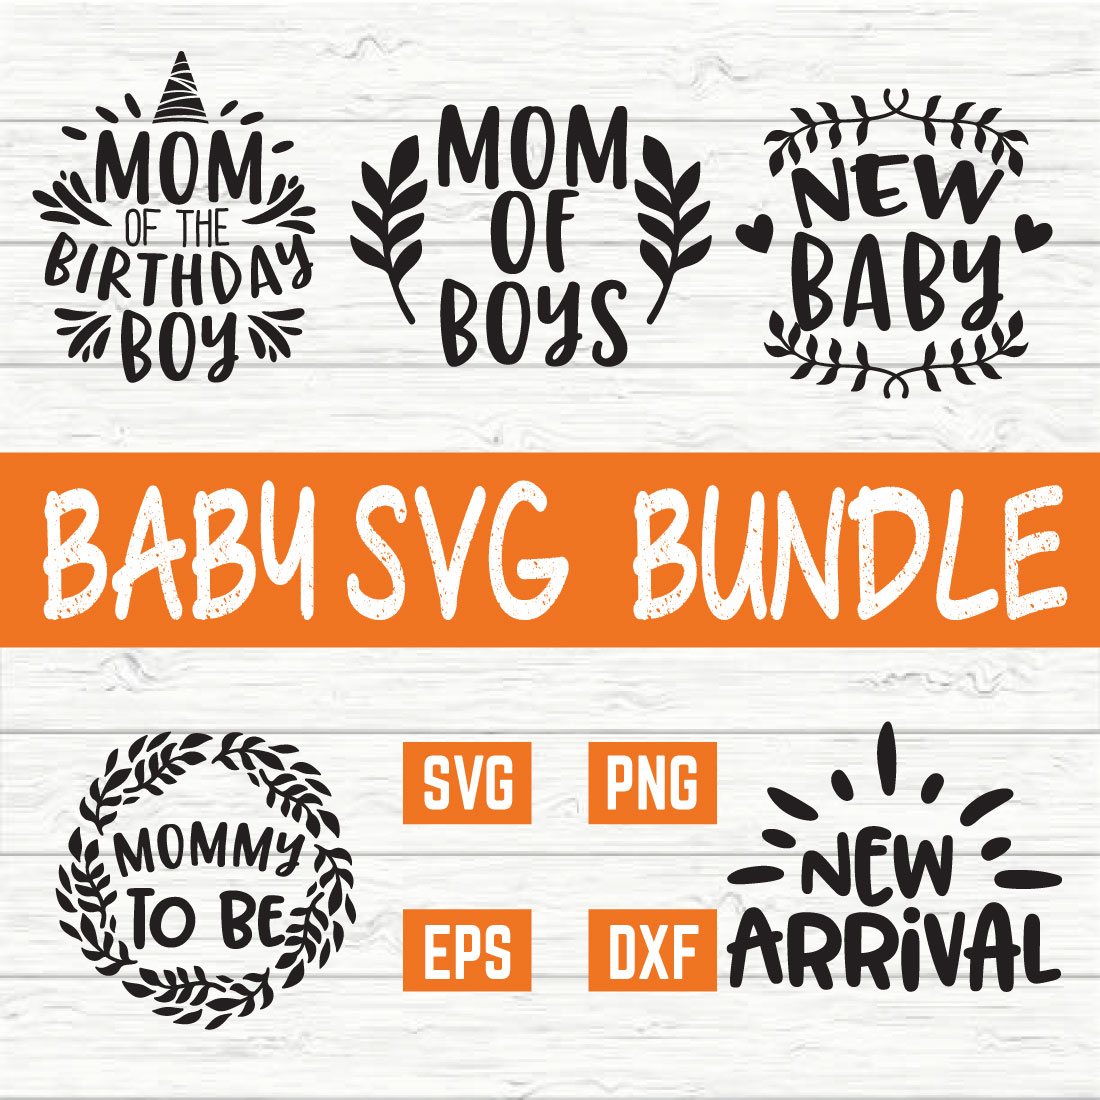 Baby Svg Bundle vol 8 preview image.